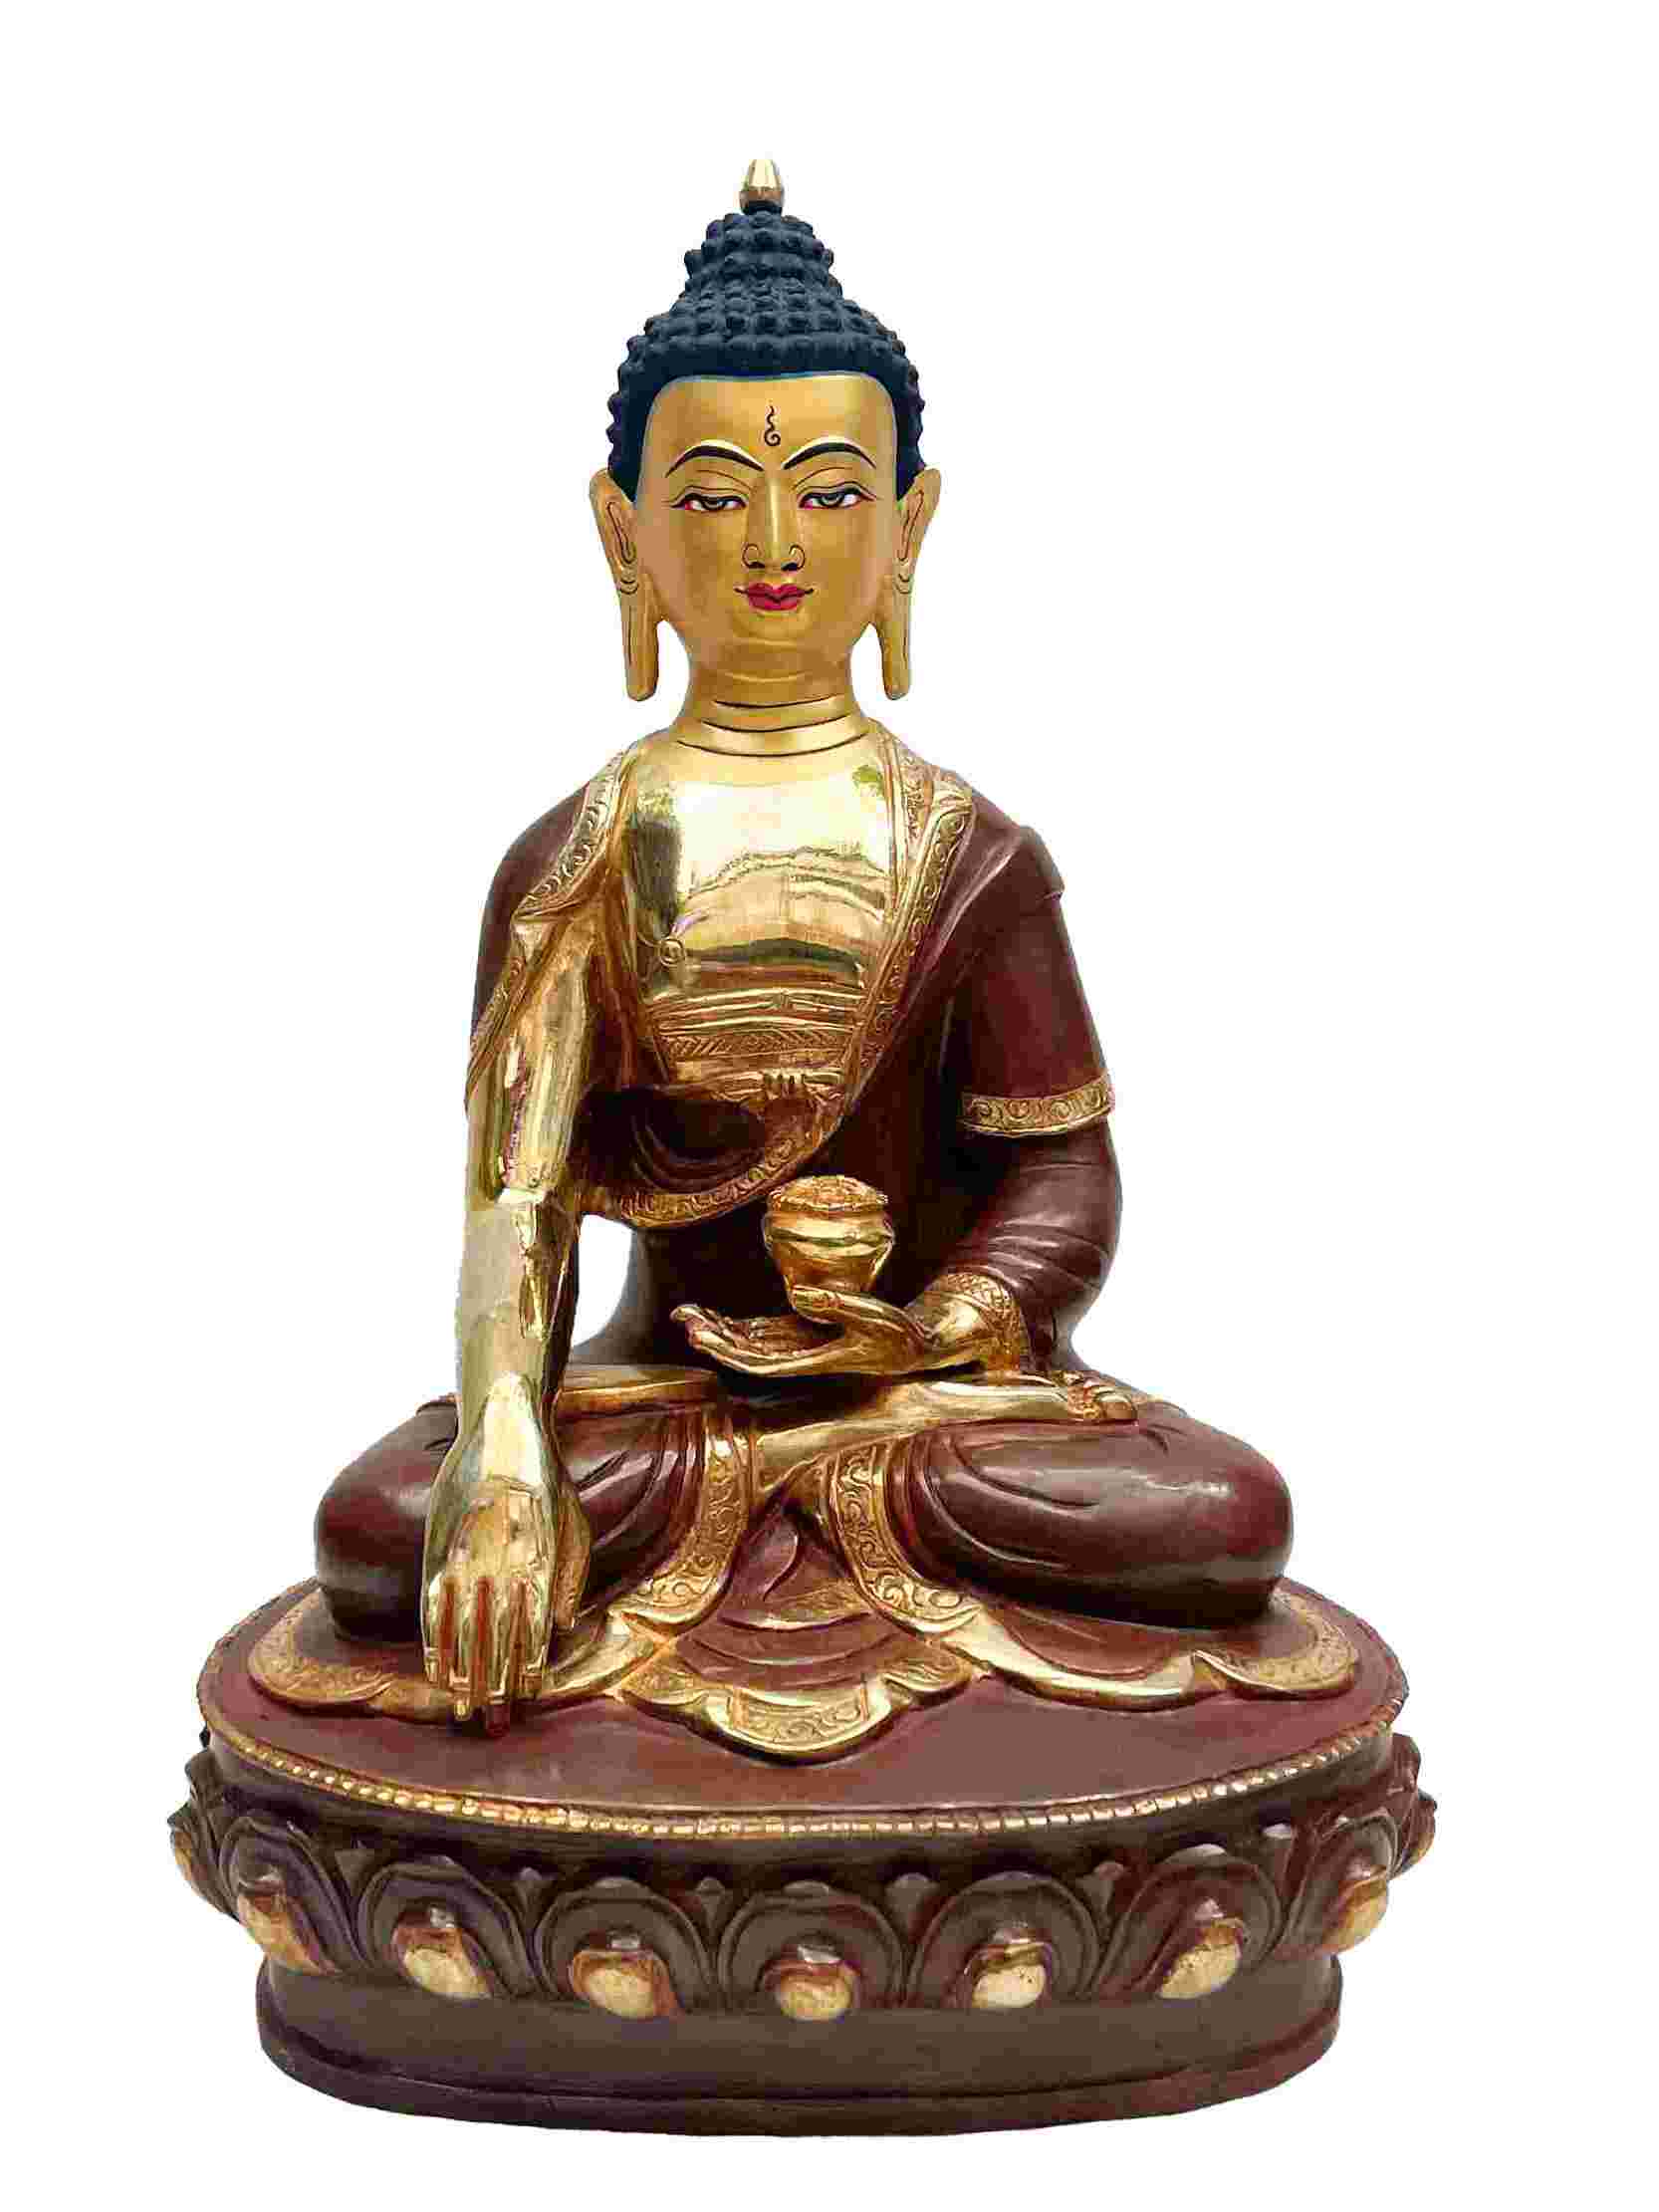 Buddhist Handmade Statue Of Pancha Buddha amoghasiddhi Buddha, Shakyamuni Buddha, Ratnasambhava Buddha,vairochana Buddha, Amitabha Buddha, partly Gold Plated With Painted Face